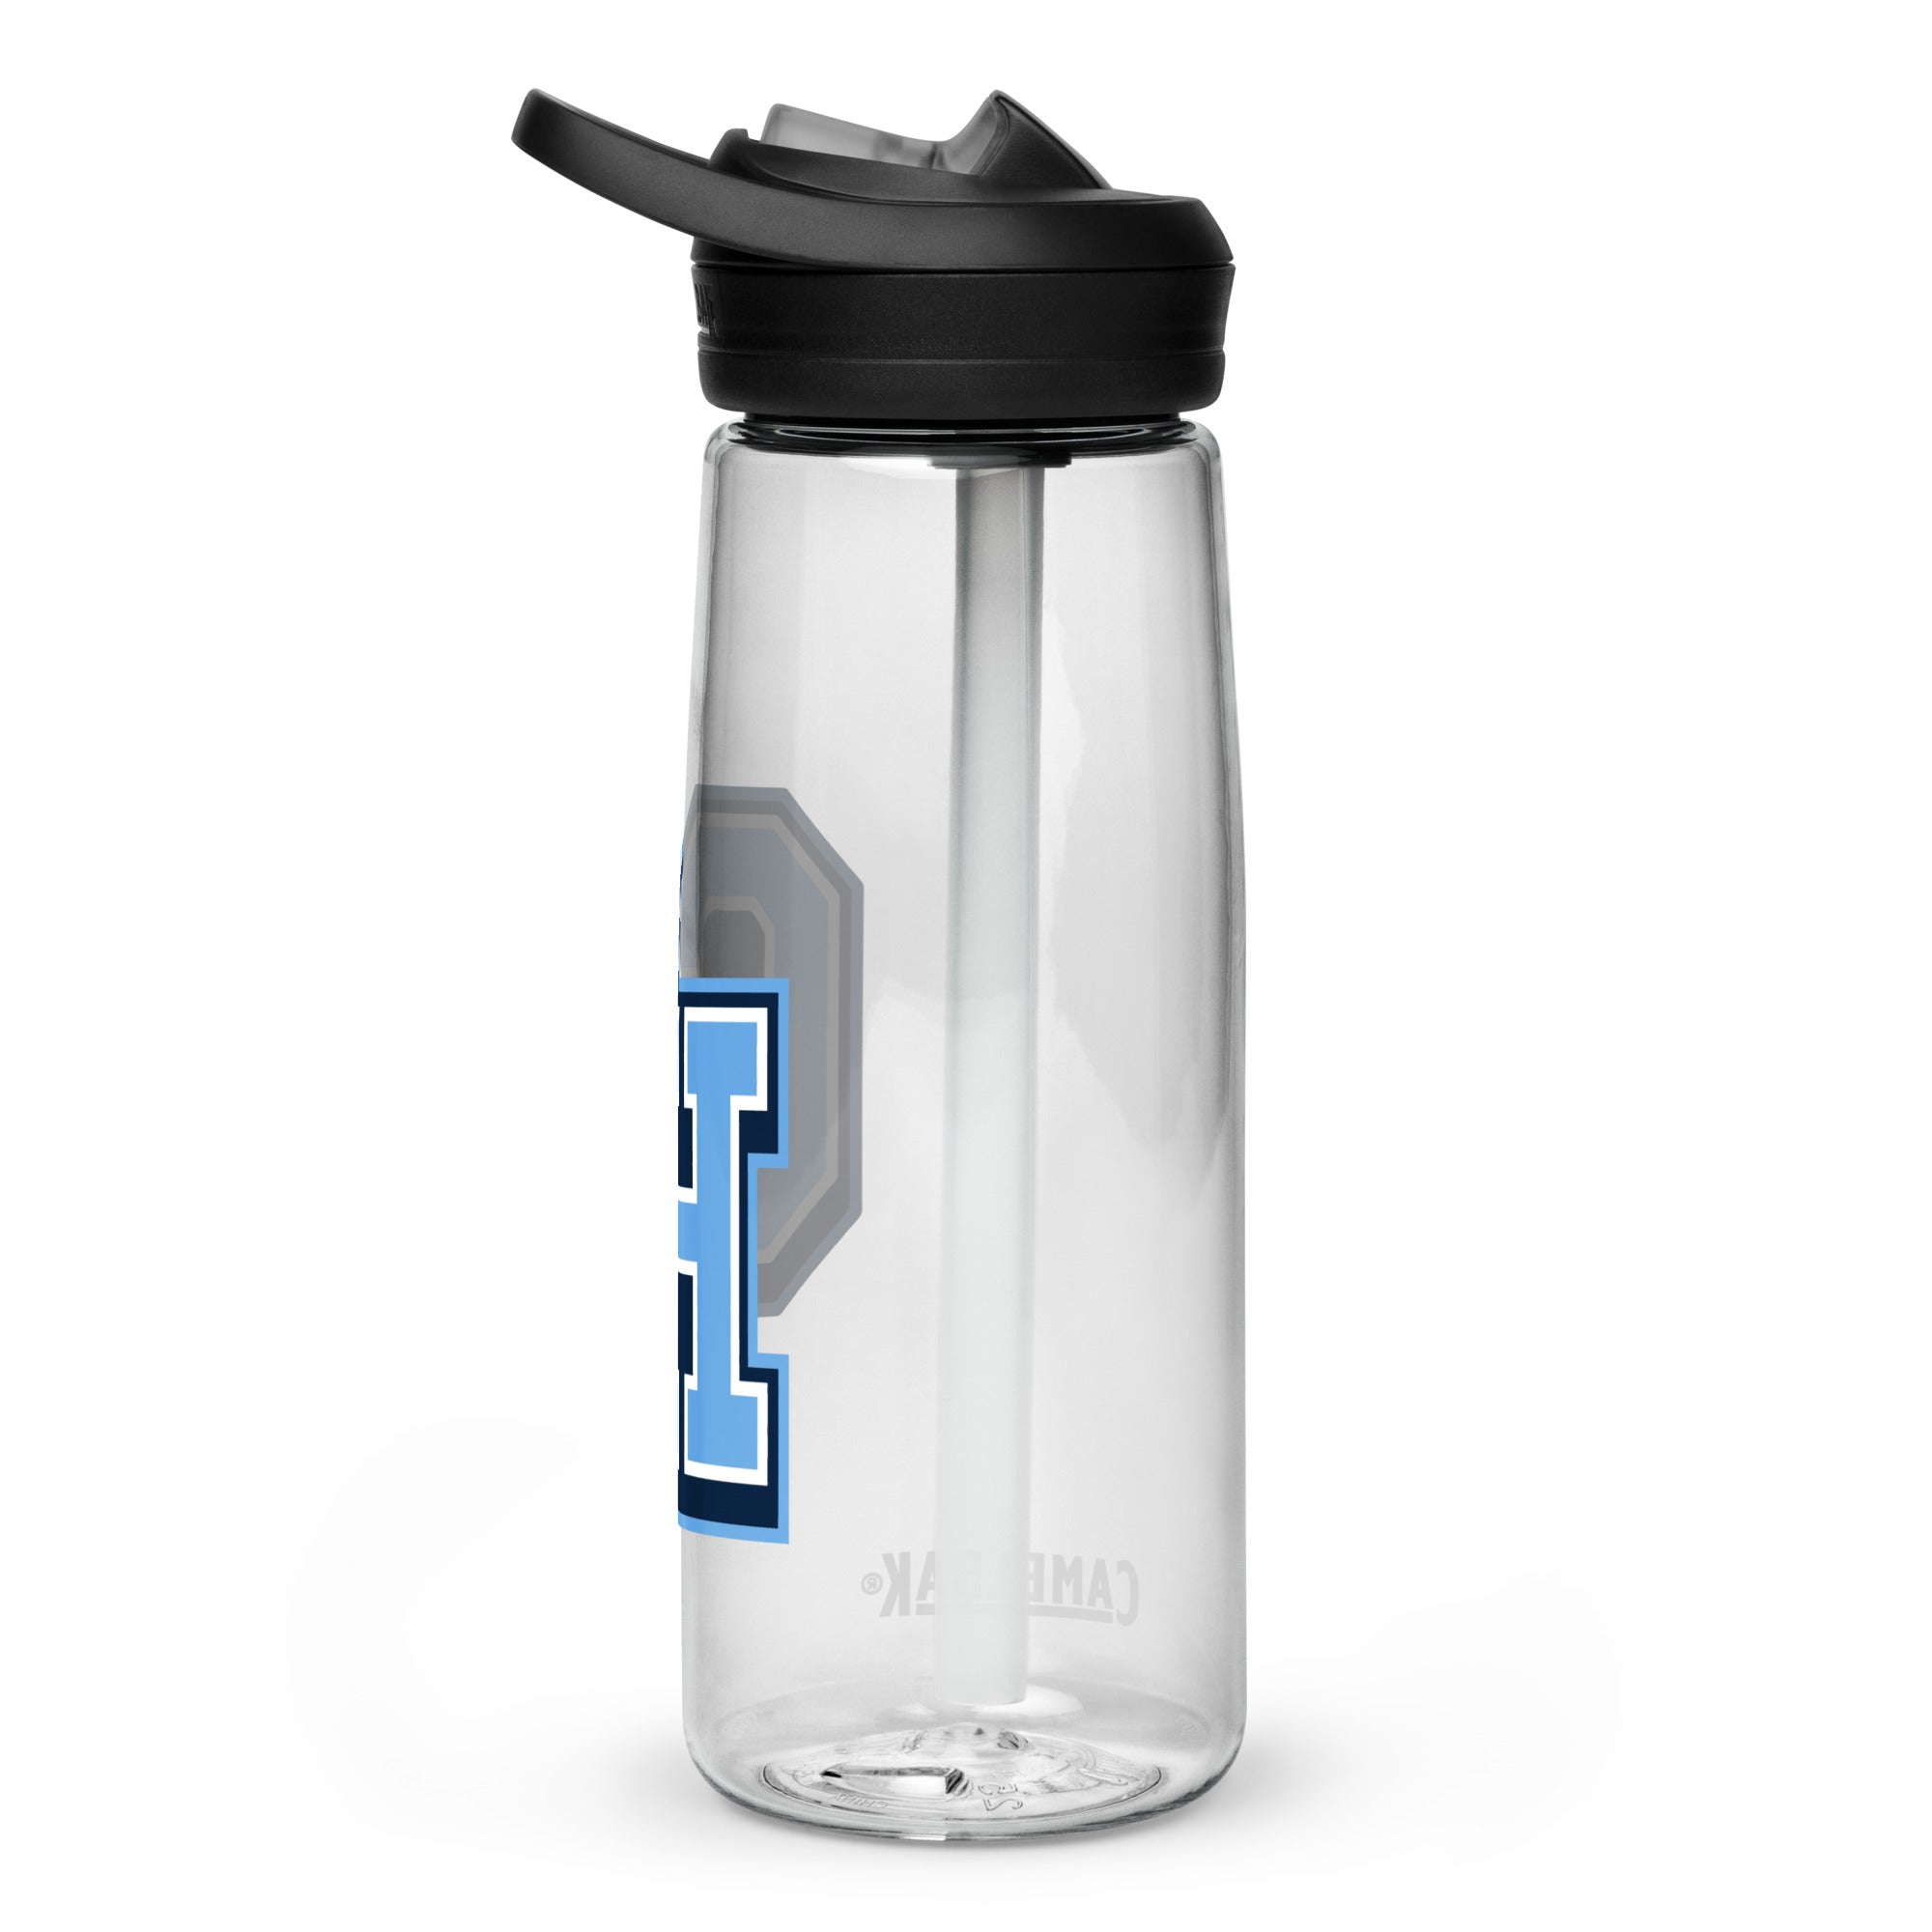 GHL Sports water bottle